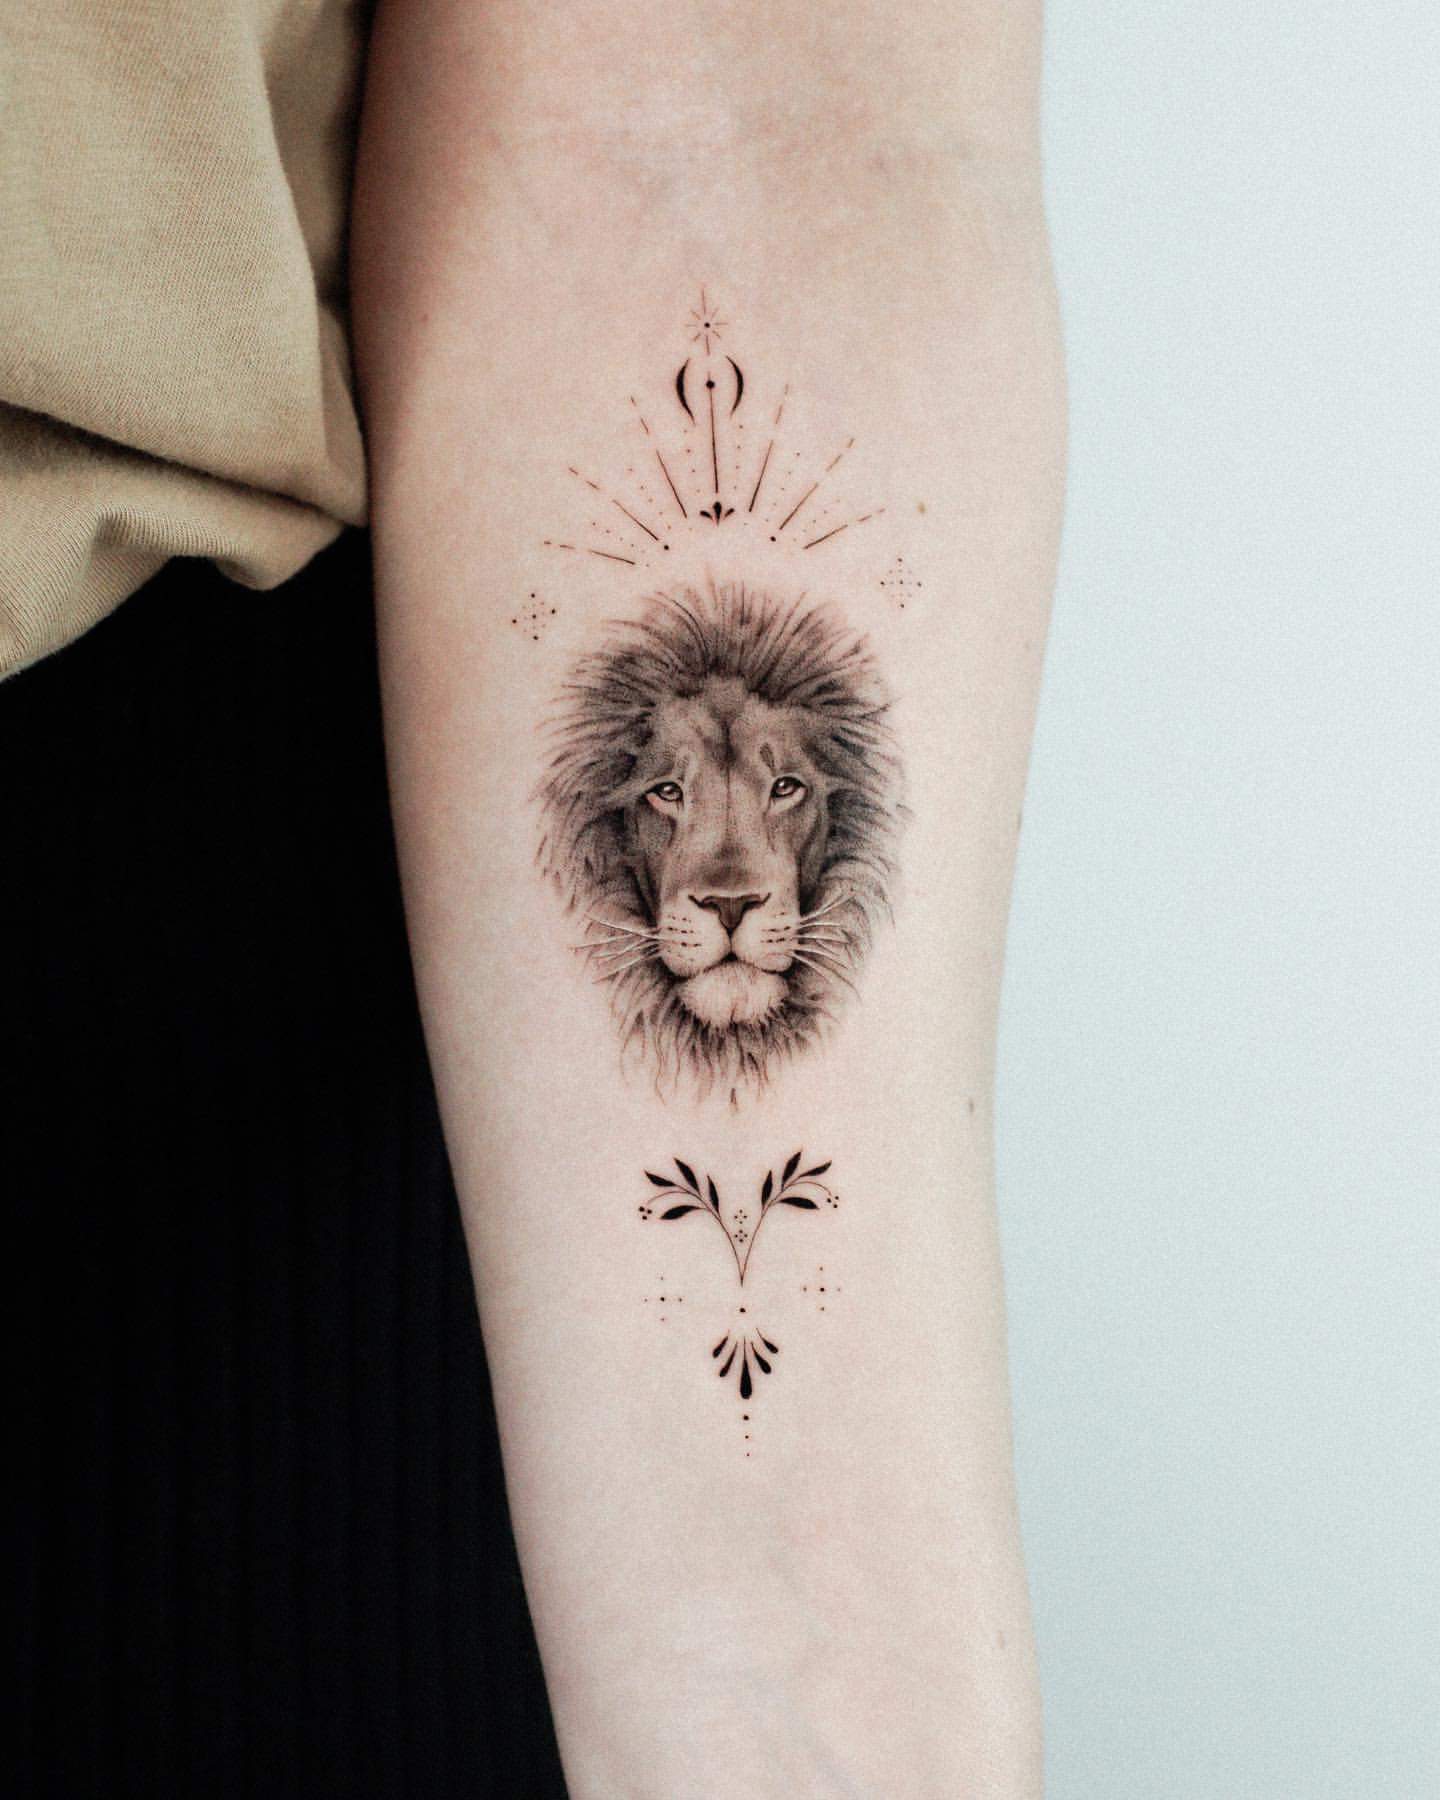 35 Best Lion Tattoos For Men: Ideas And Designs 2023 | FashionBeans